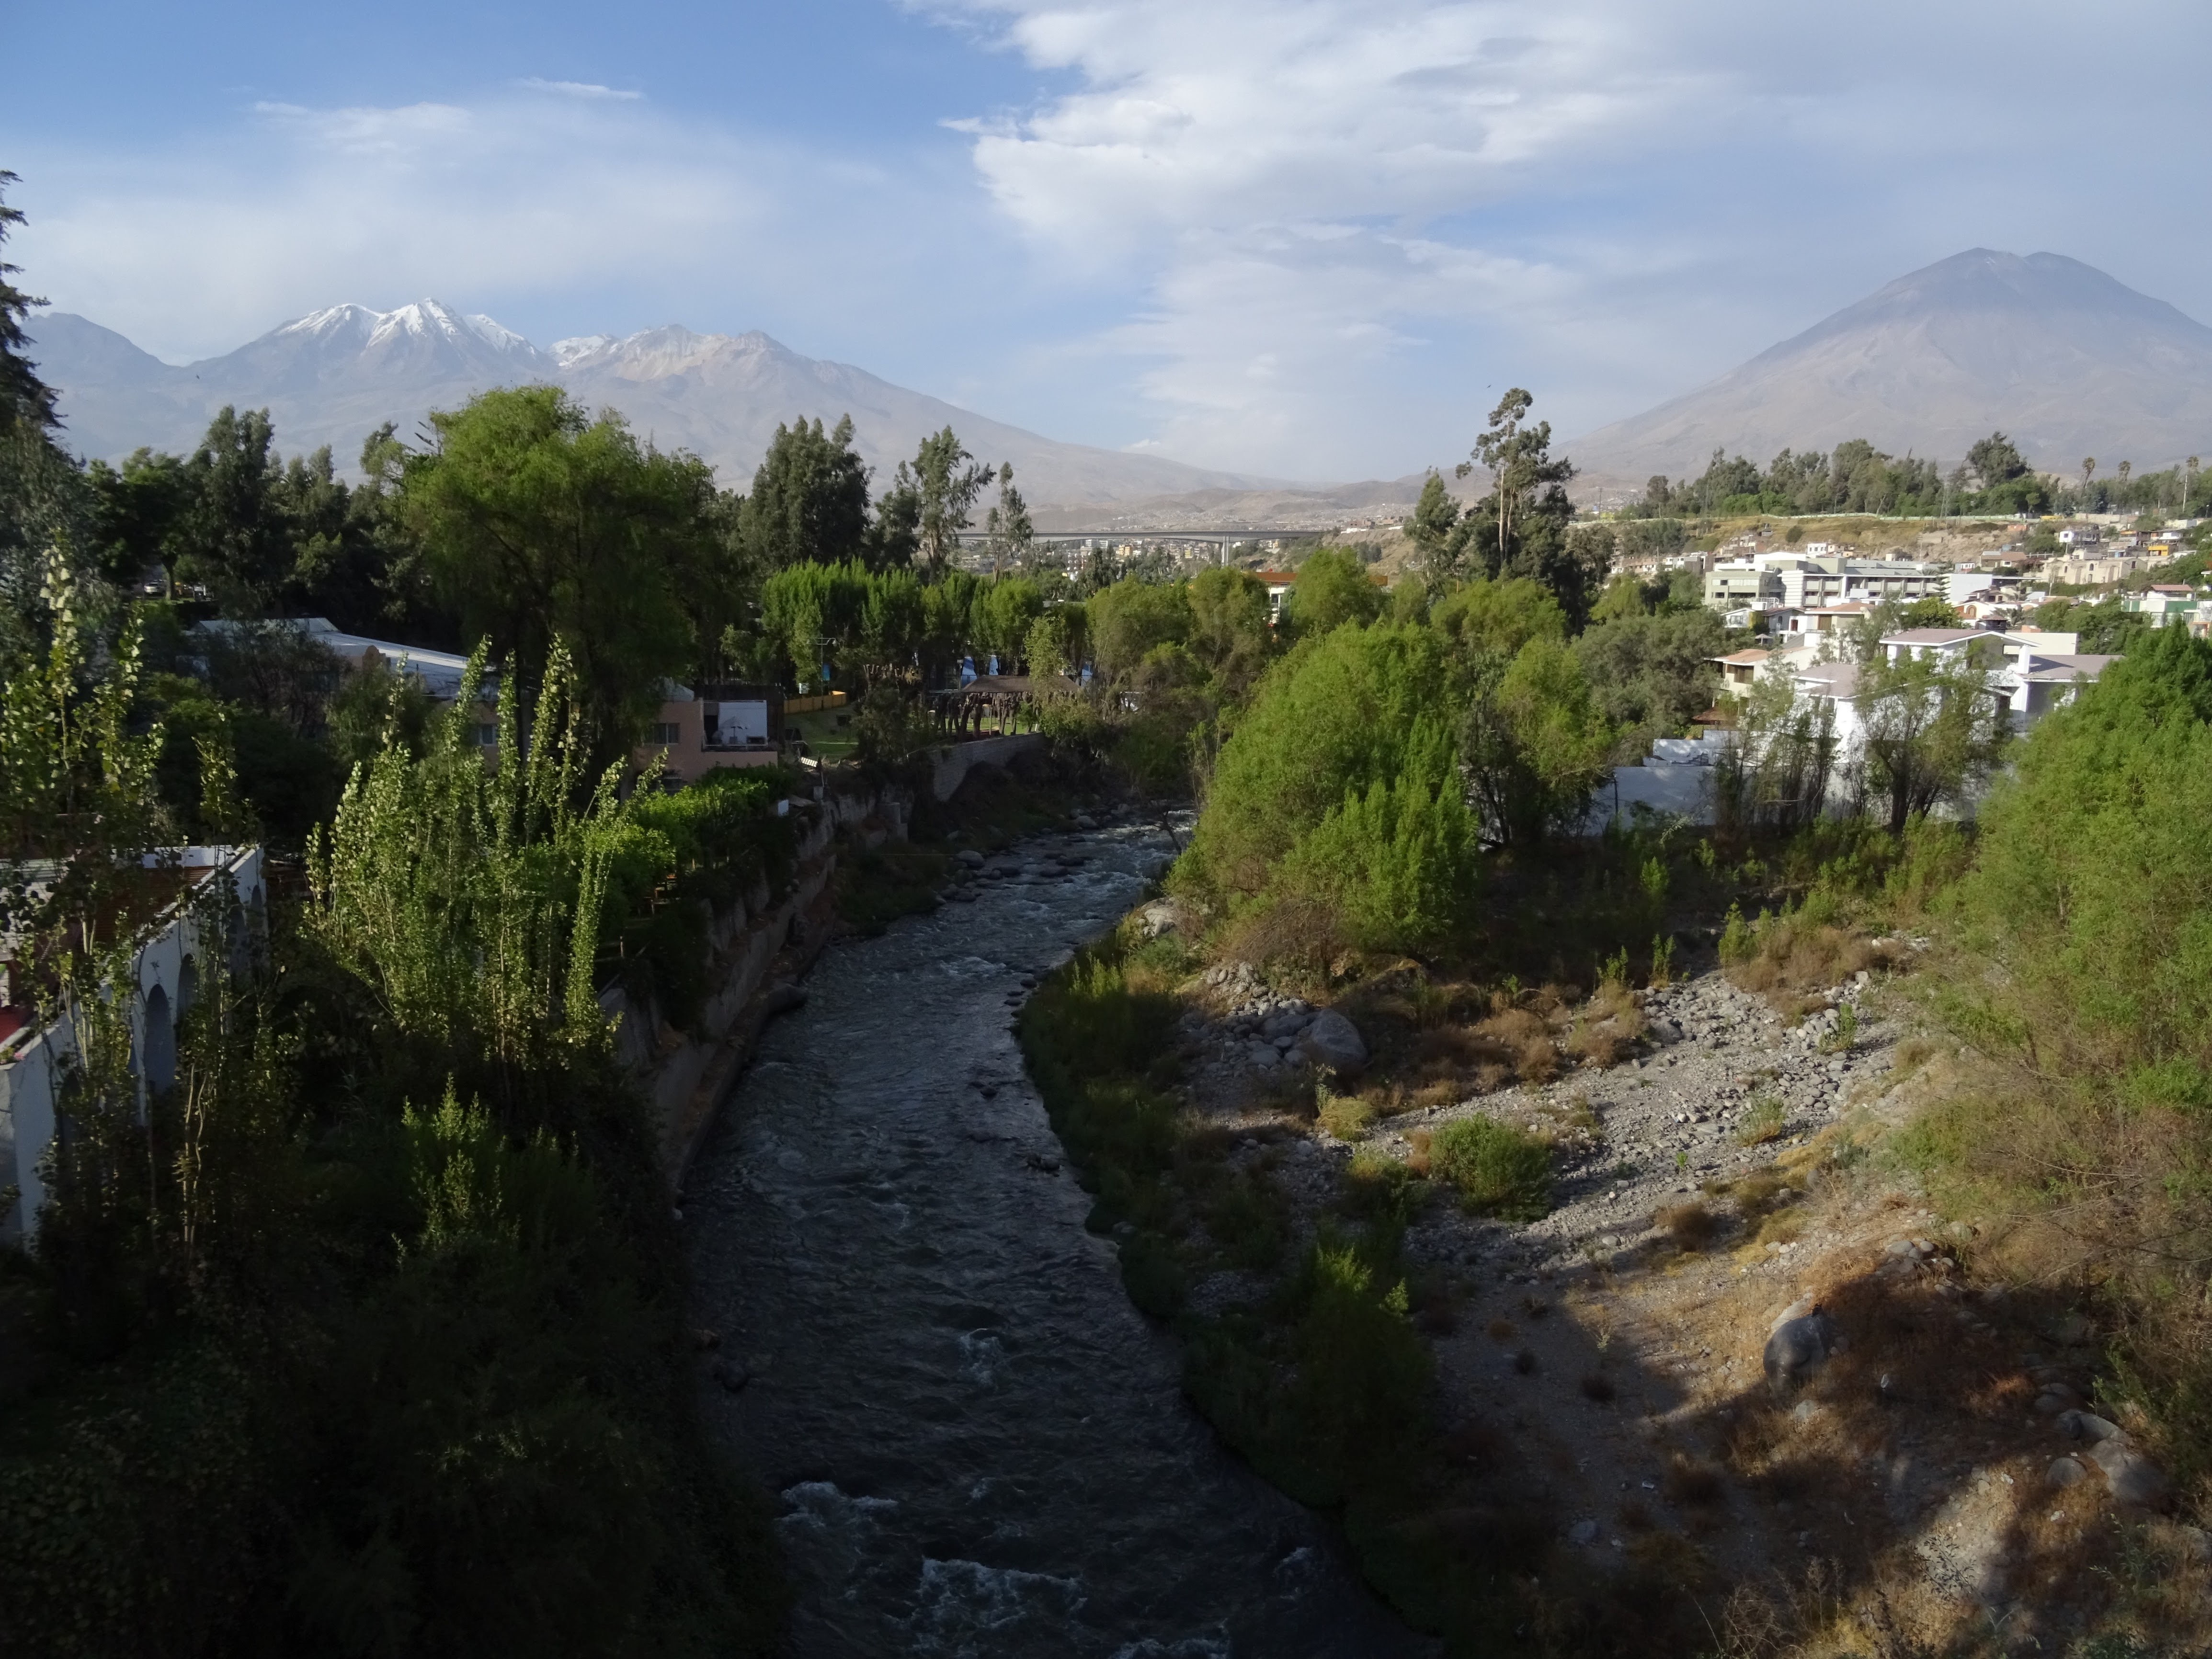 River through Arequipa city